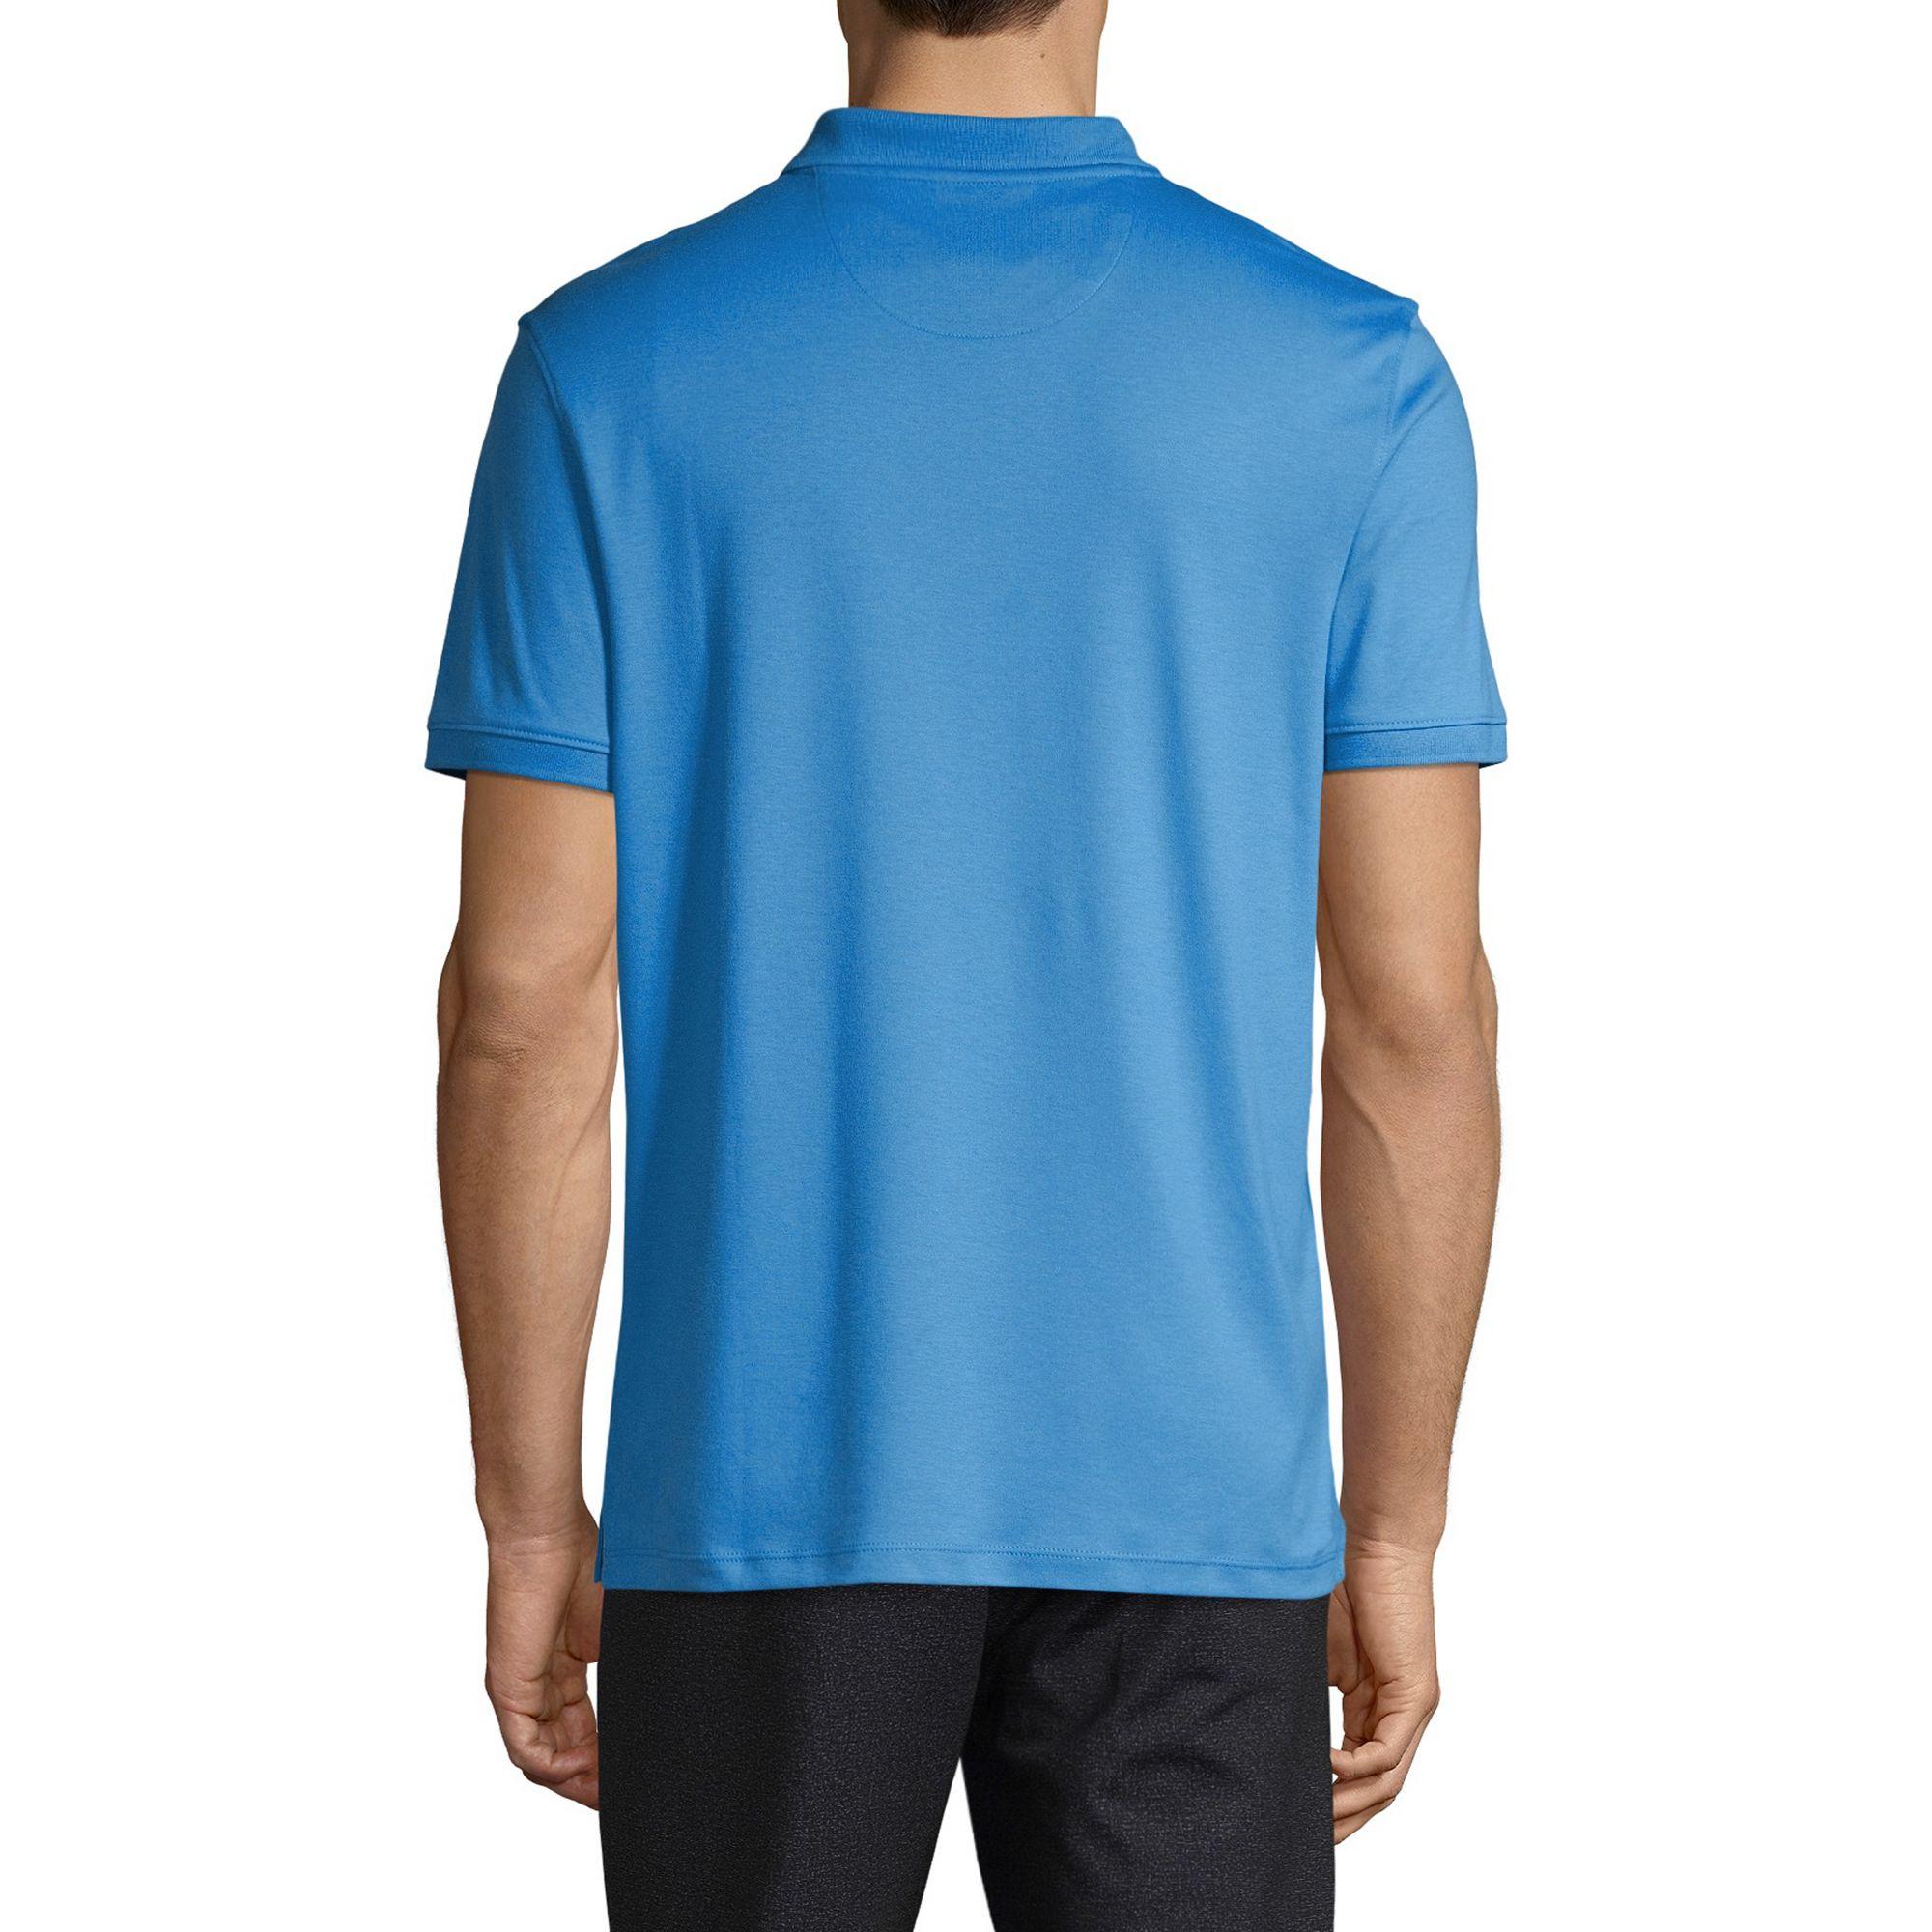 Calvin Klein Liquid Touch Cotton Polo in Blue for Men - Lyst